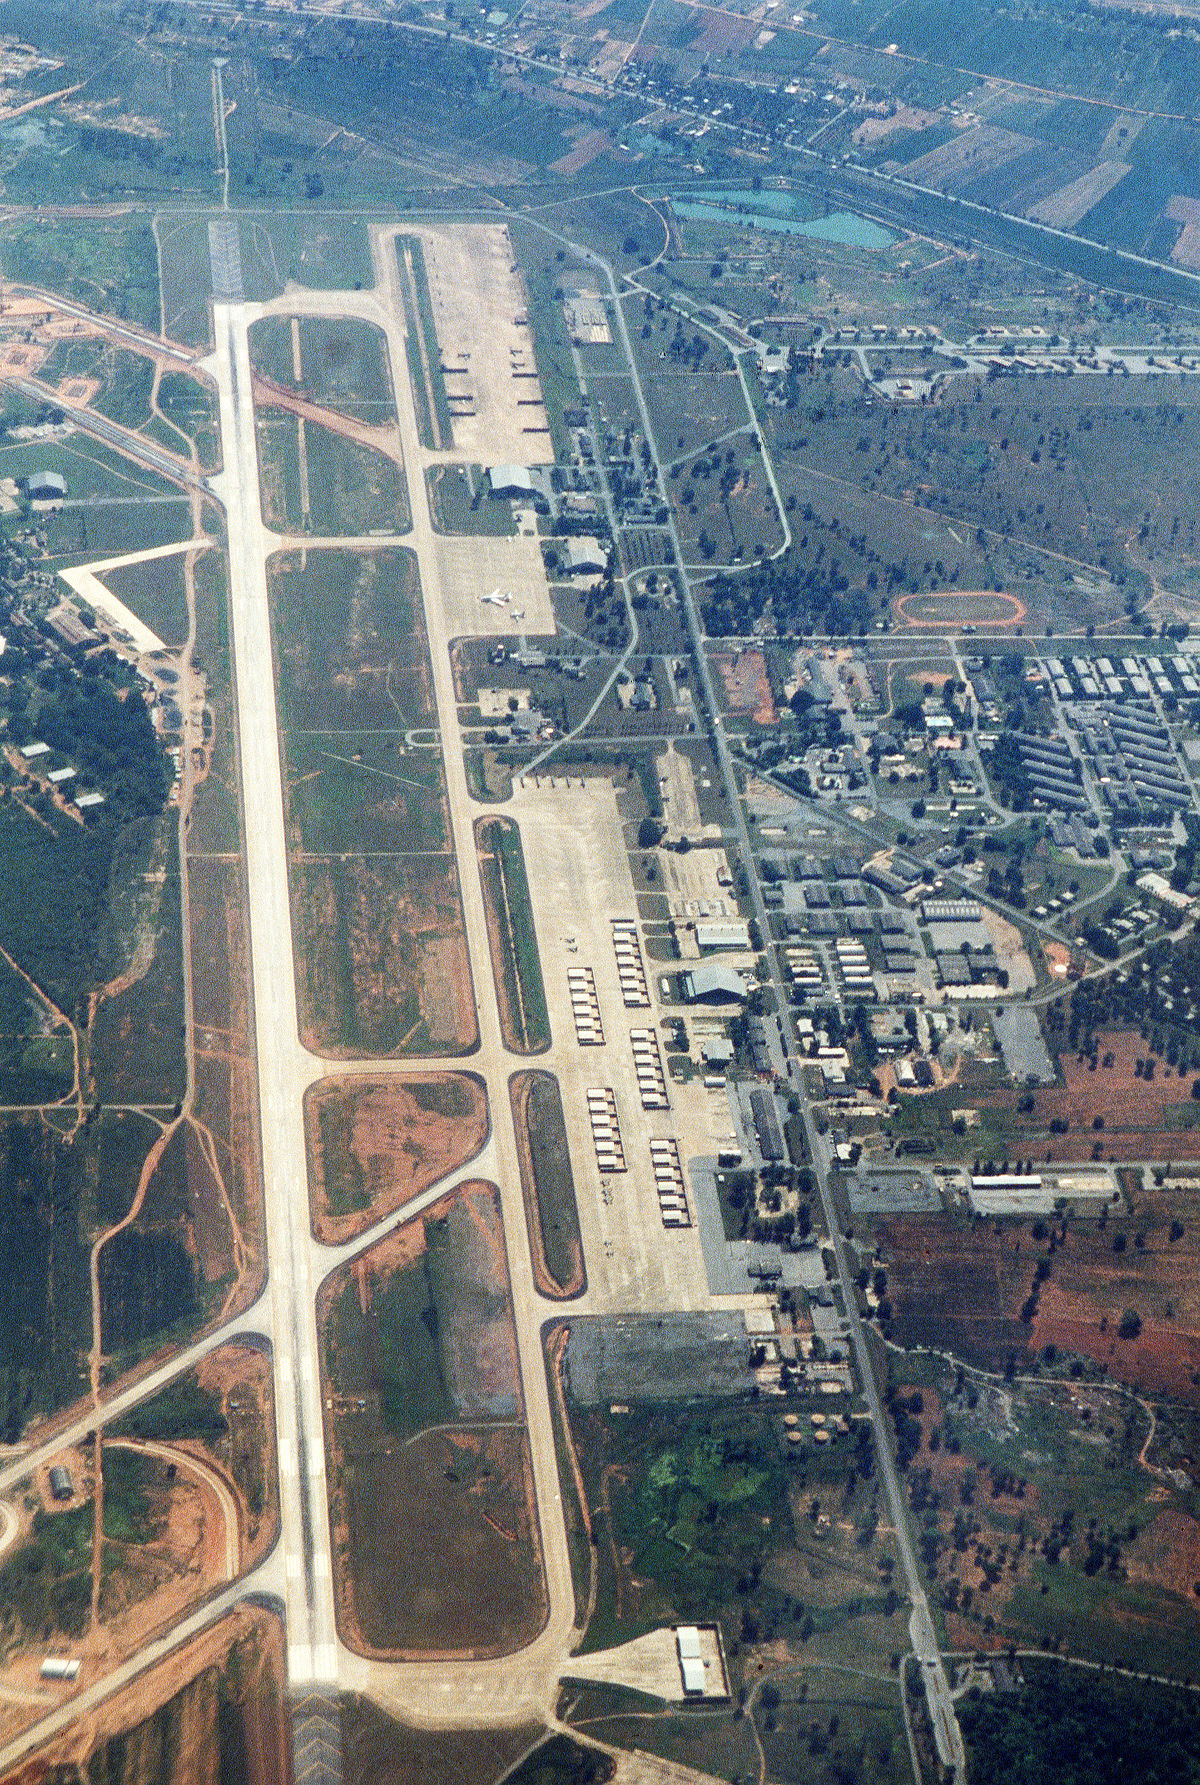 Korat Royal Thai Air Force Base - Wikipedia